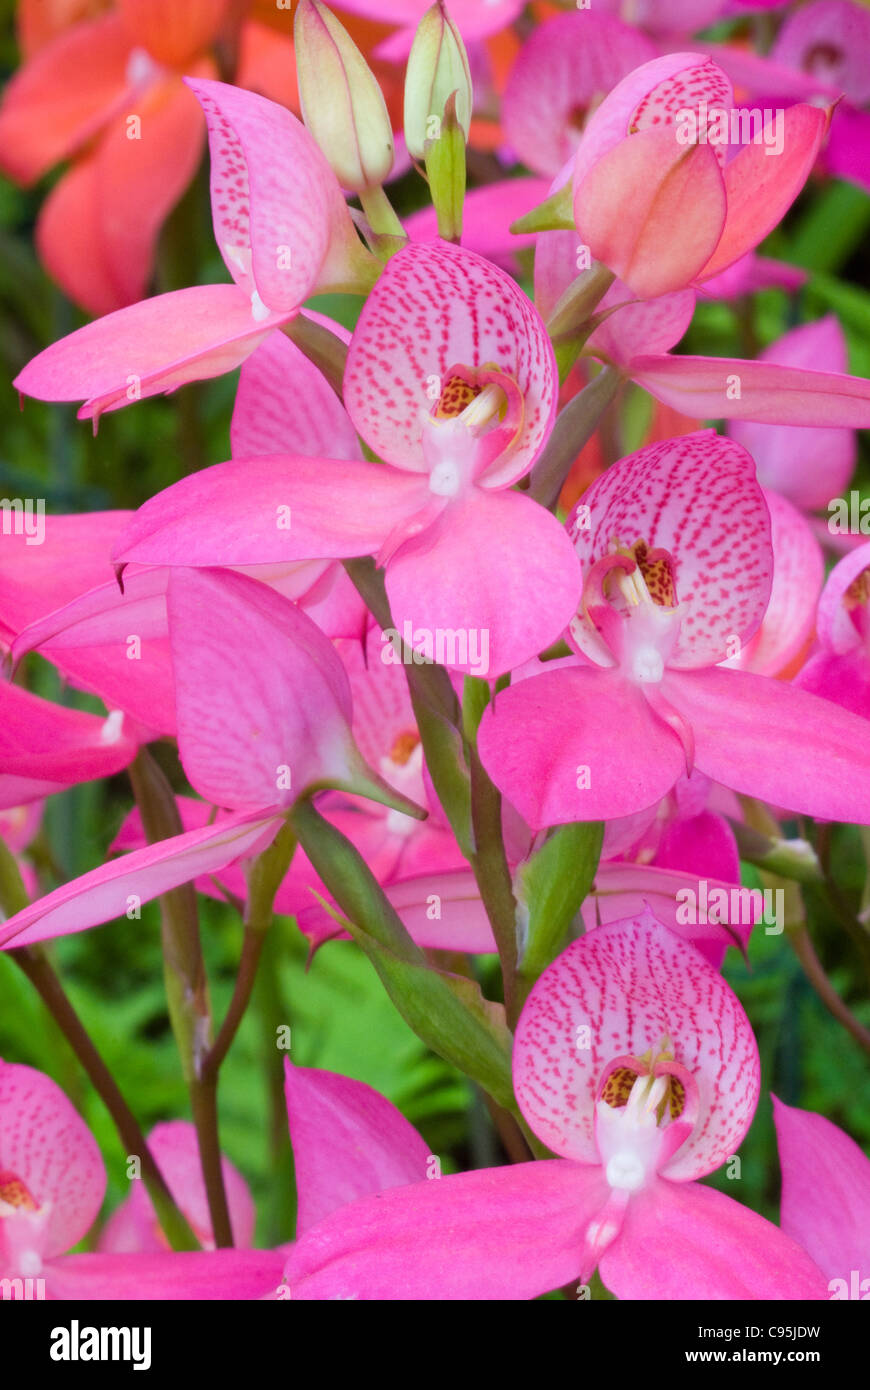 Hardy Orchid South African Table Mountain Orchid Disa Watsonii "Sandra", terrestrischen Orchideen-Arten, rosa Blume blüht Stockfoto